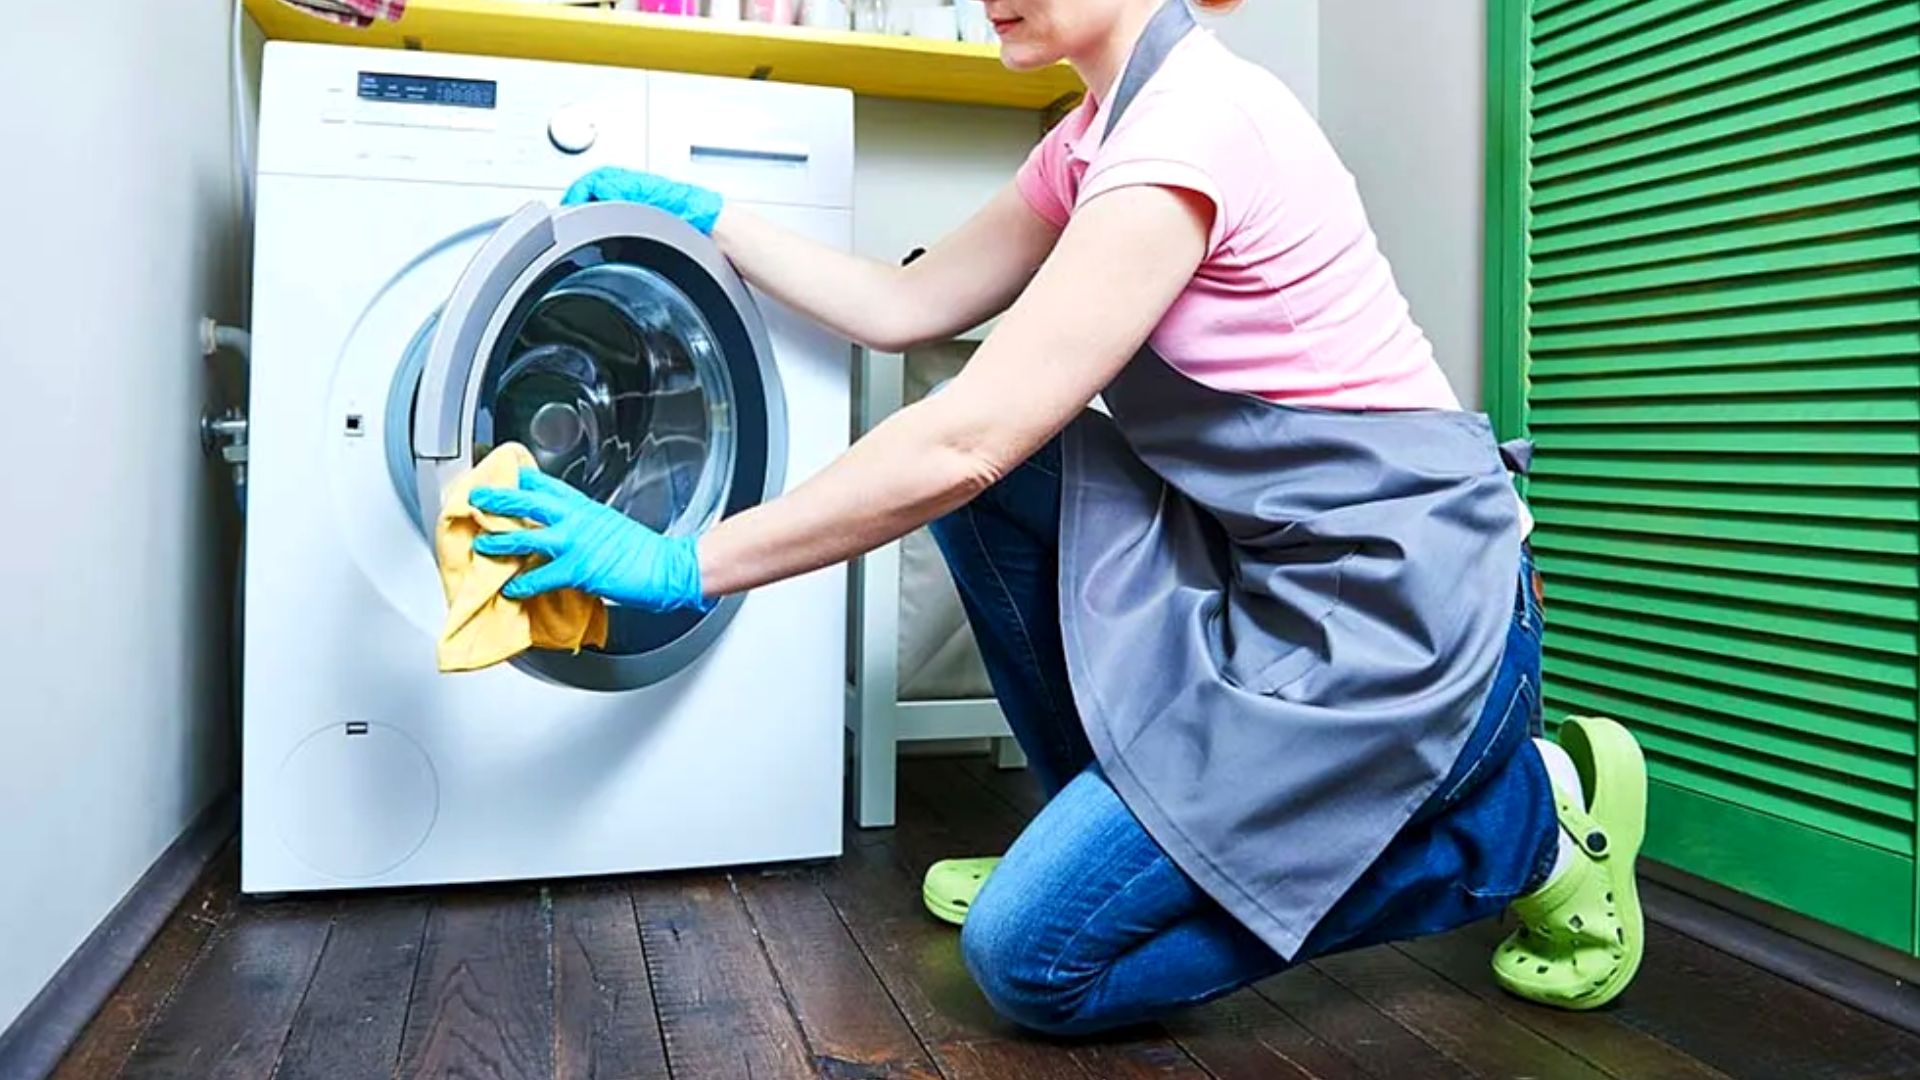 Woman Cleaning A Washing Machine.jpg